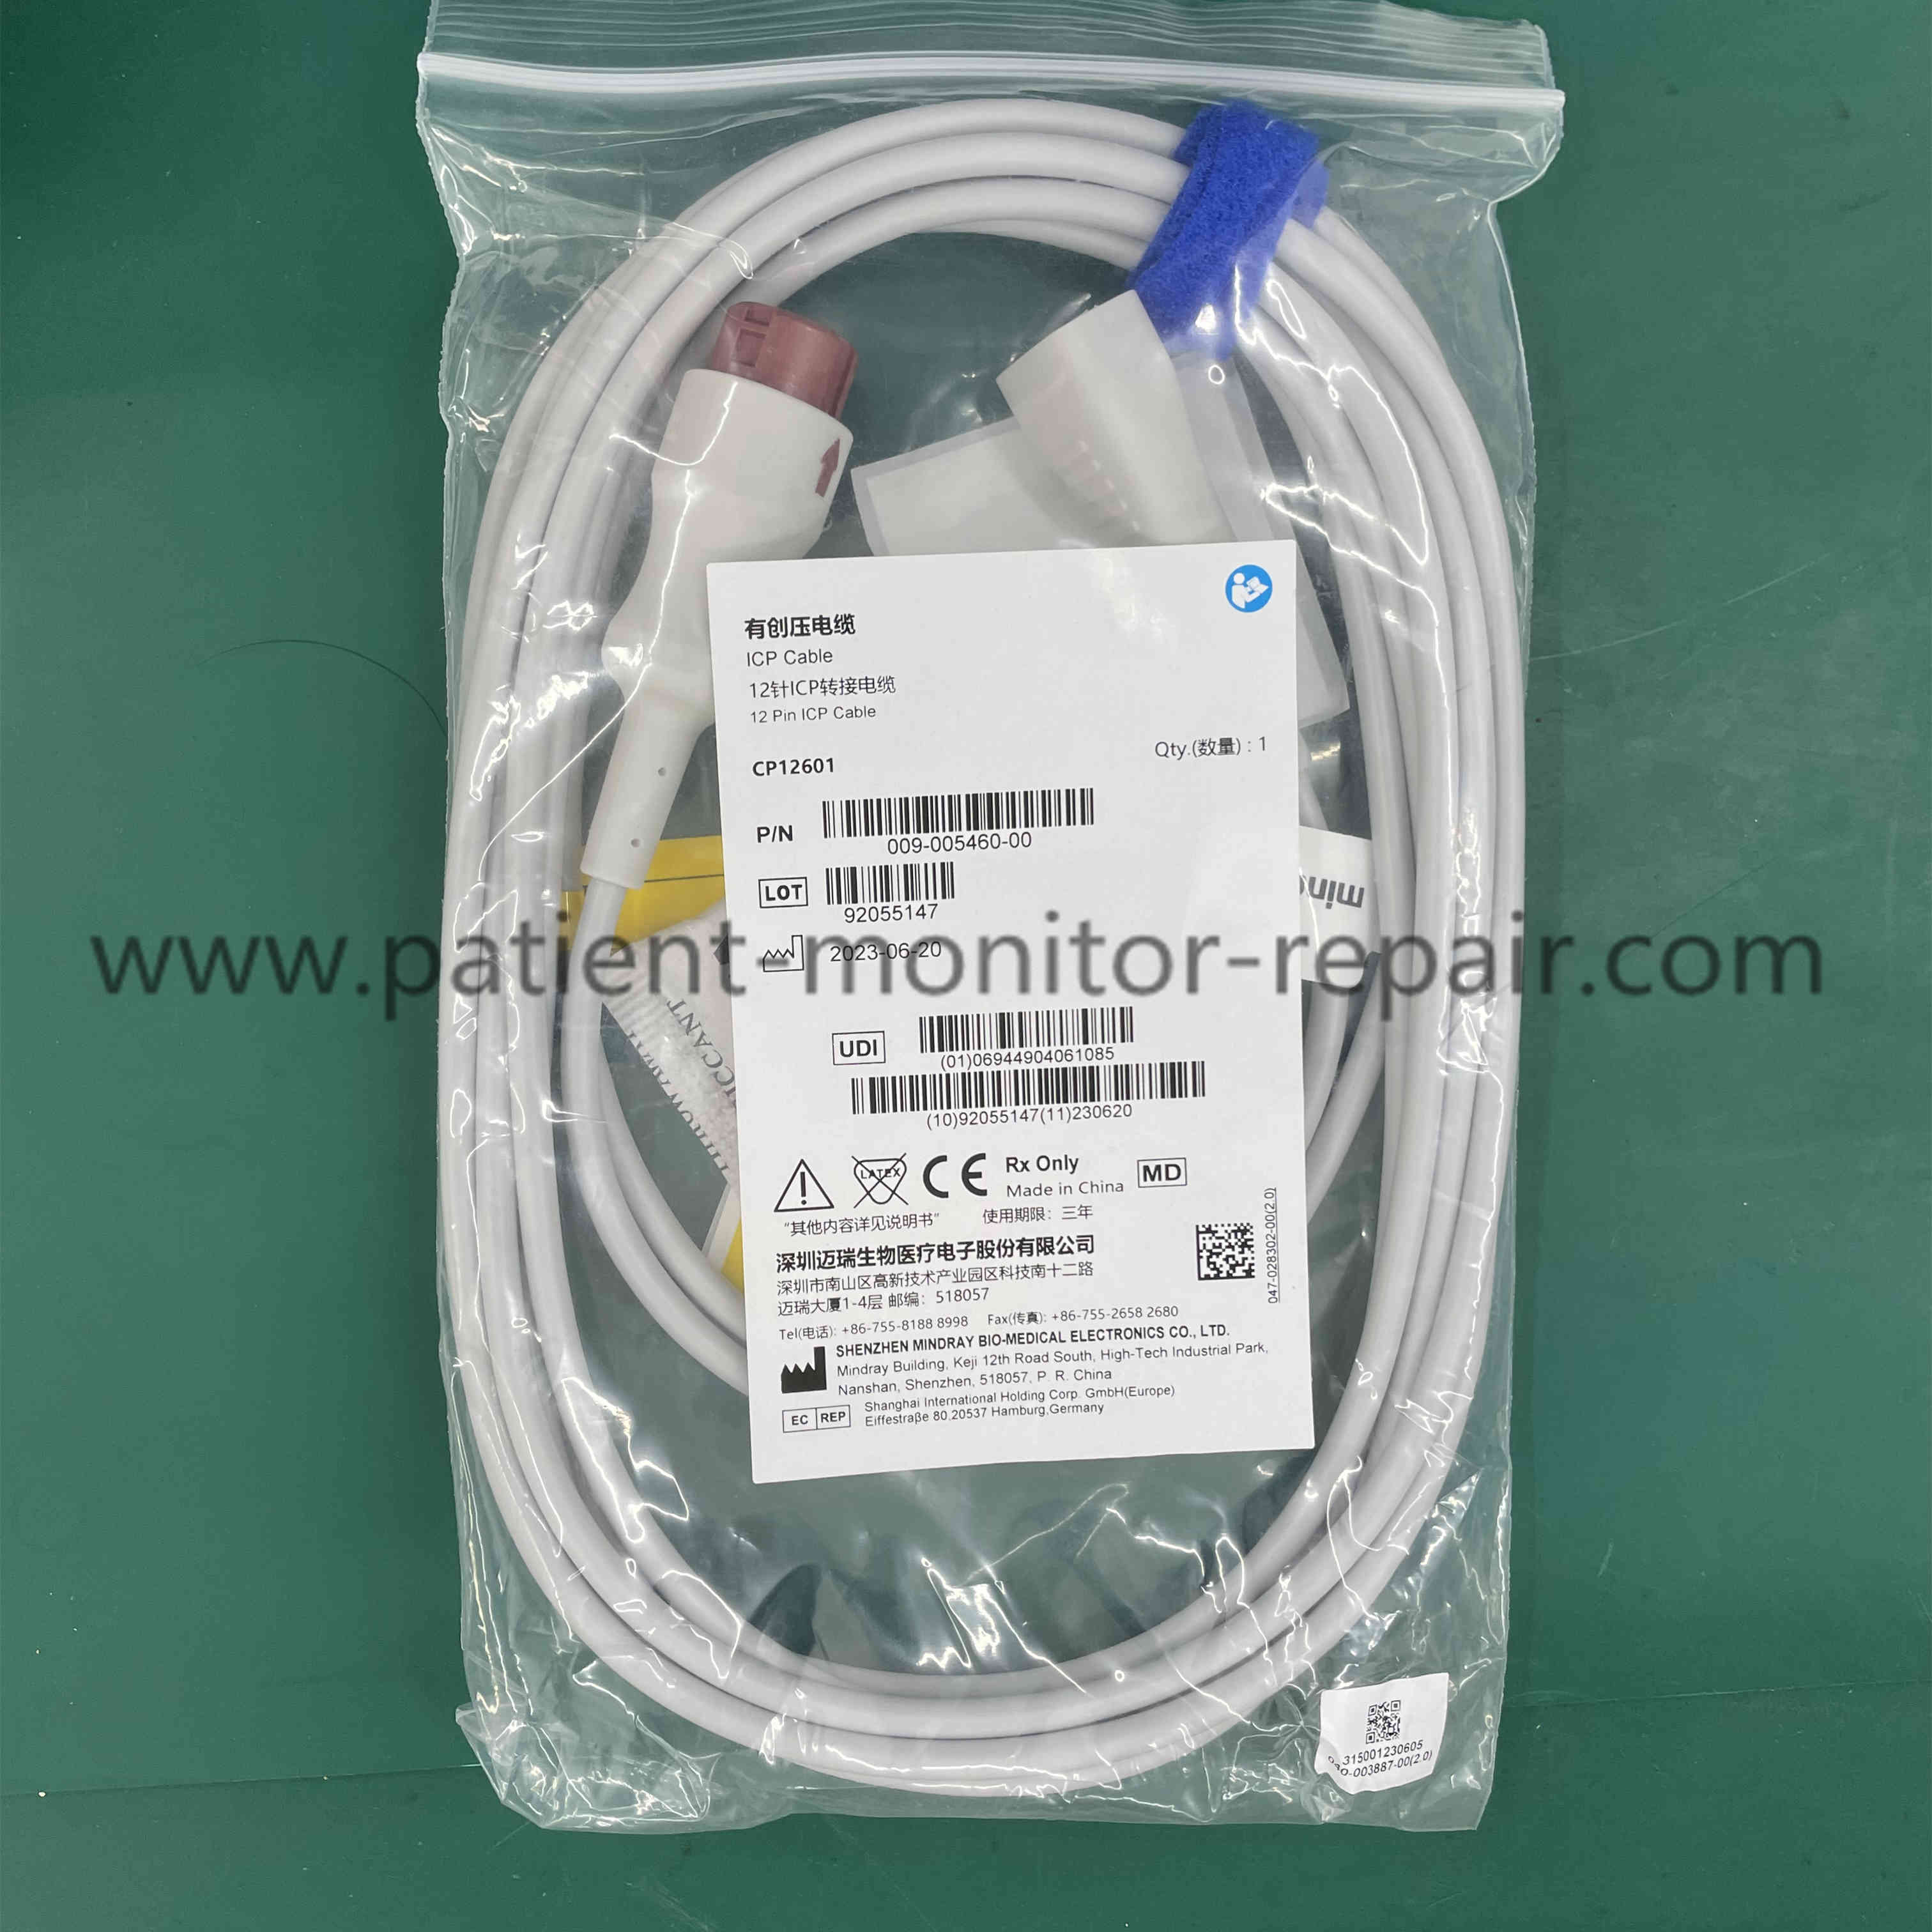 Mindray 12 Pin Codman ICP Cable CP12601 P/N: 009-005460-00 Reusable 4M